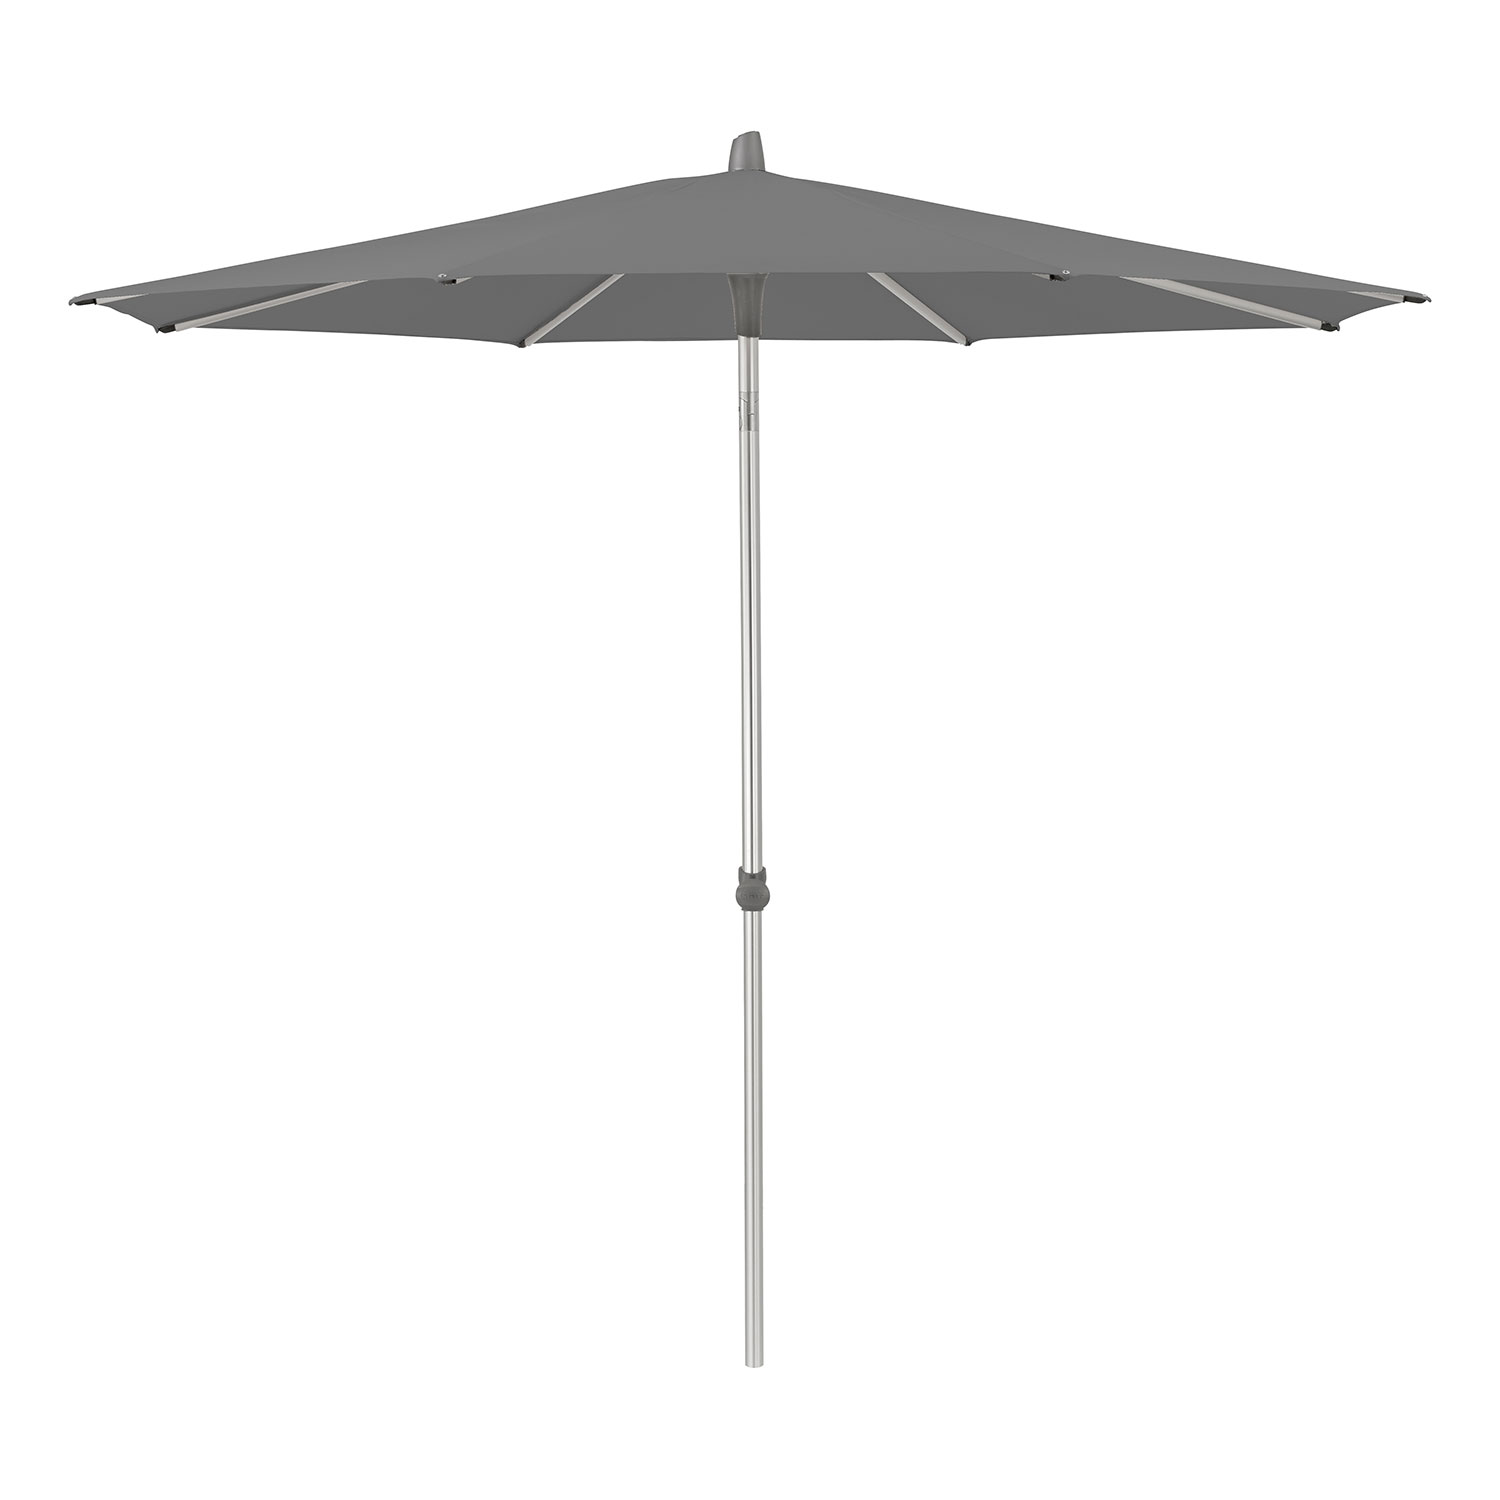 Glatz Alu-smart parasoll 200 cm kat.5 684 urban shadow